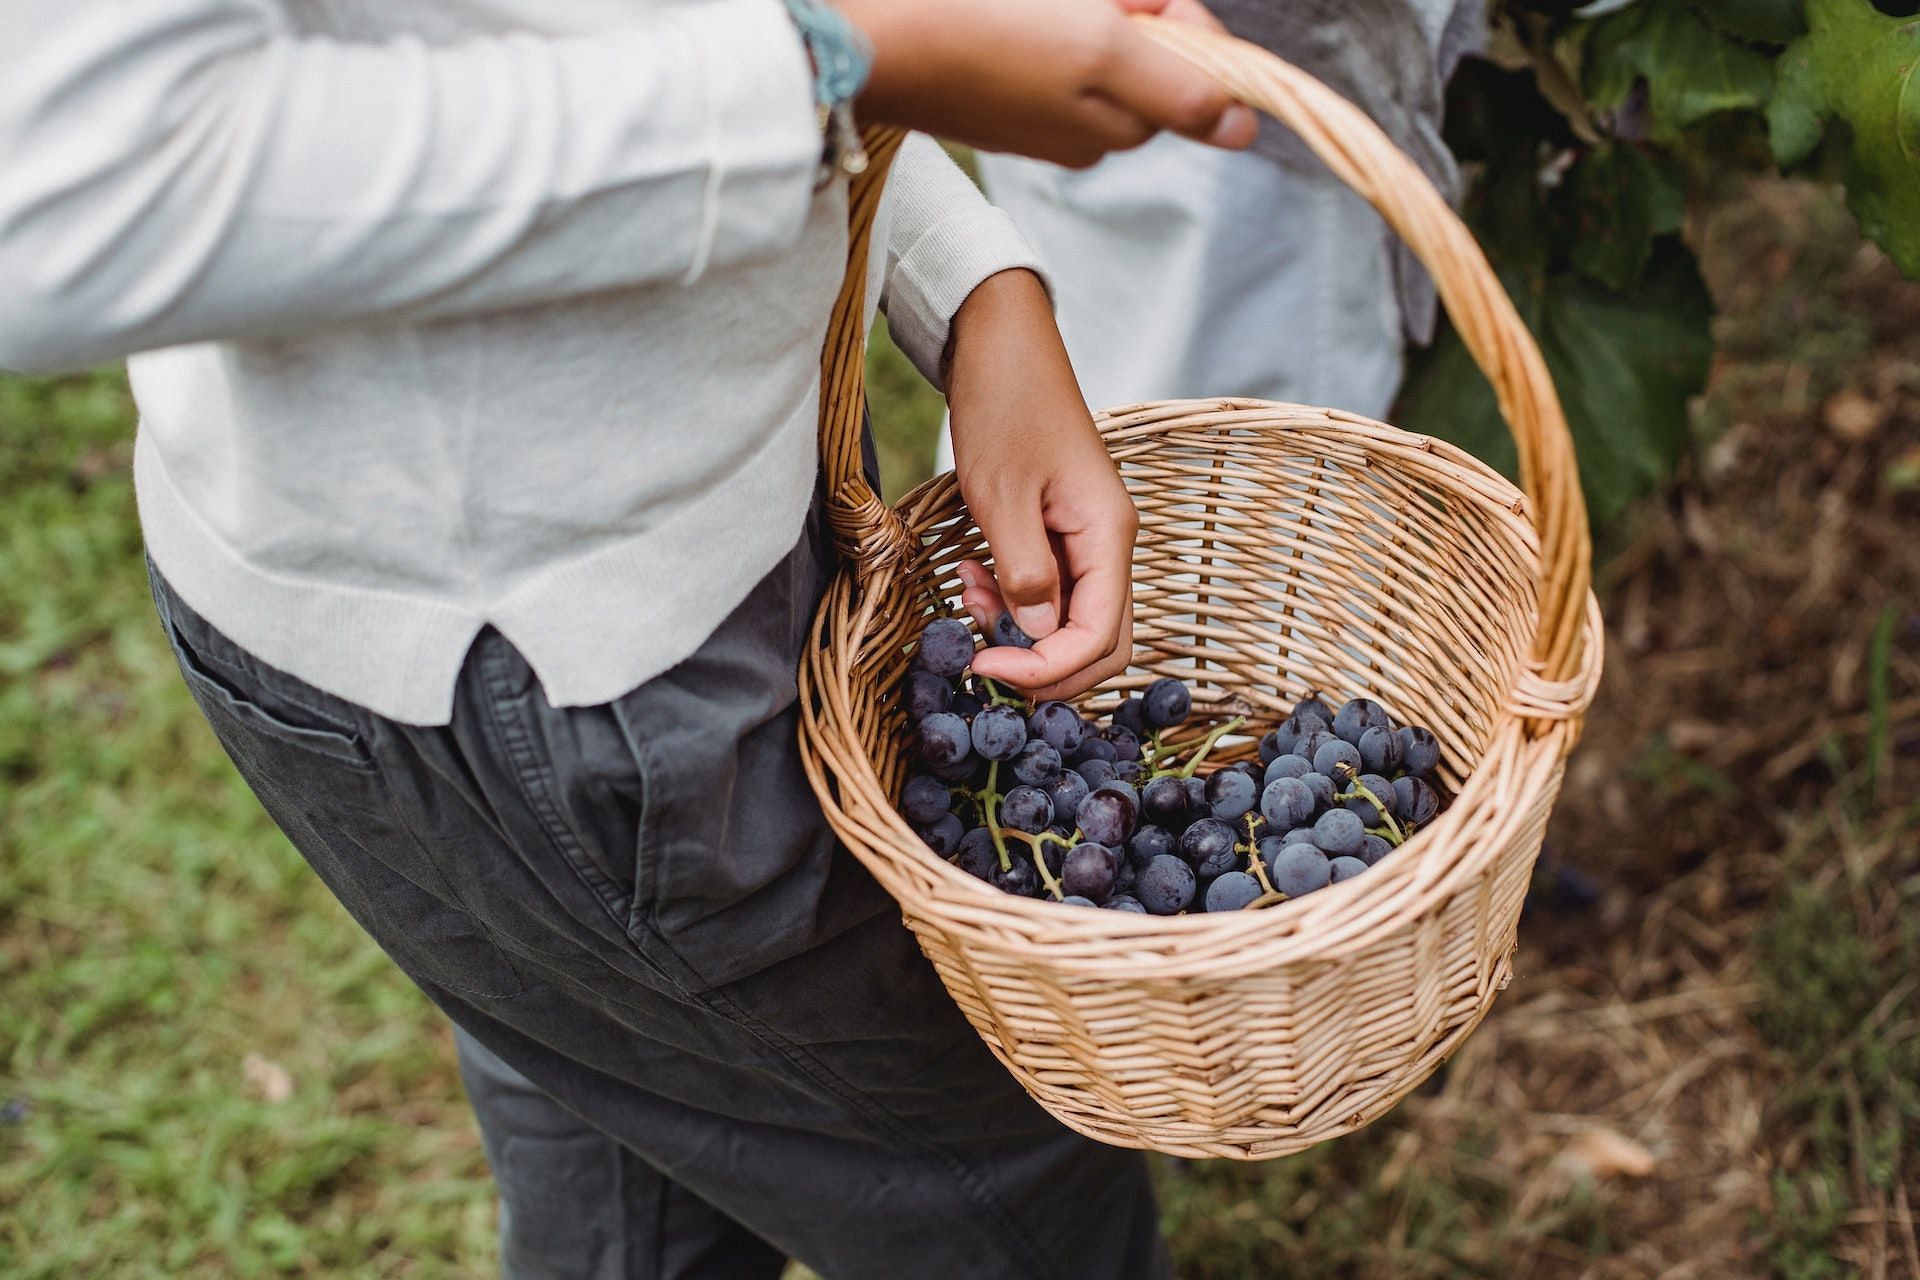 Black grapes are full of powerful antioxidants. (Image via Pexels/Zen Chung)